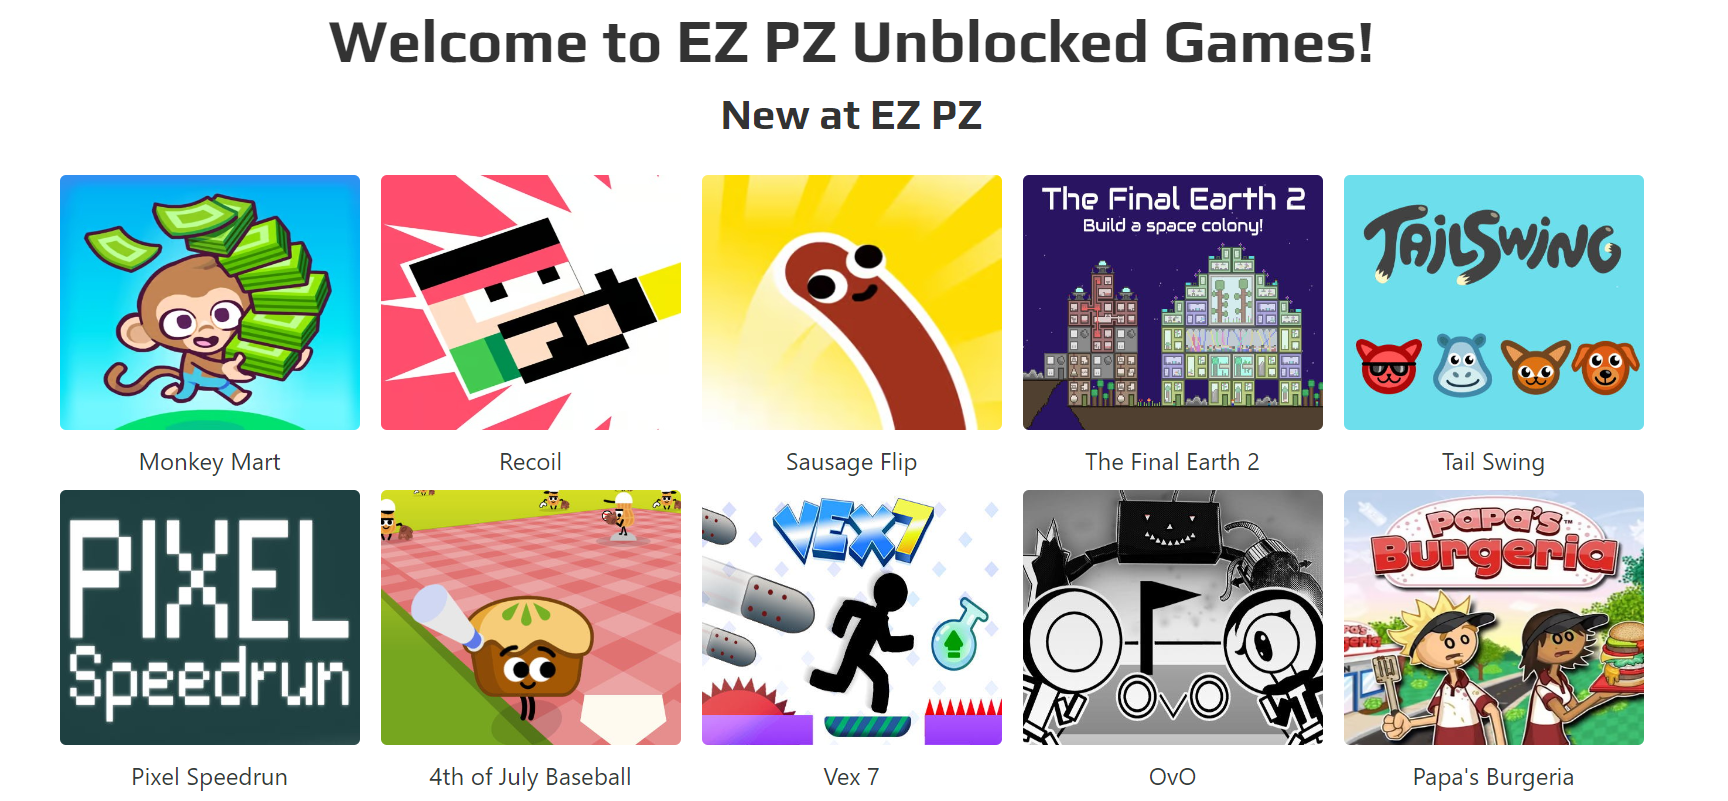 Ezpz Unblocked Games